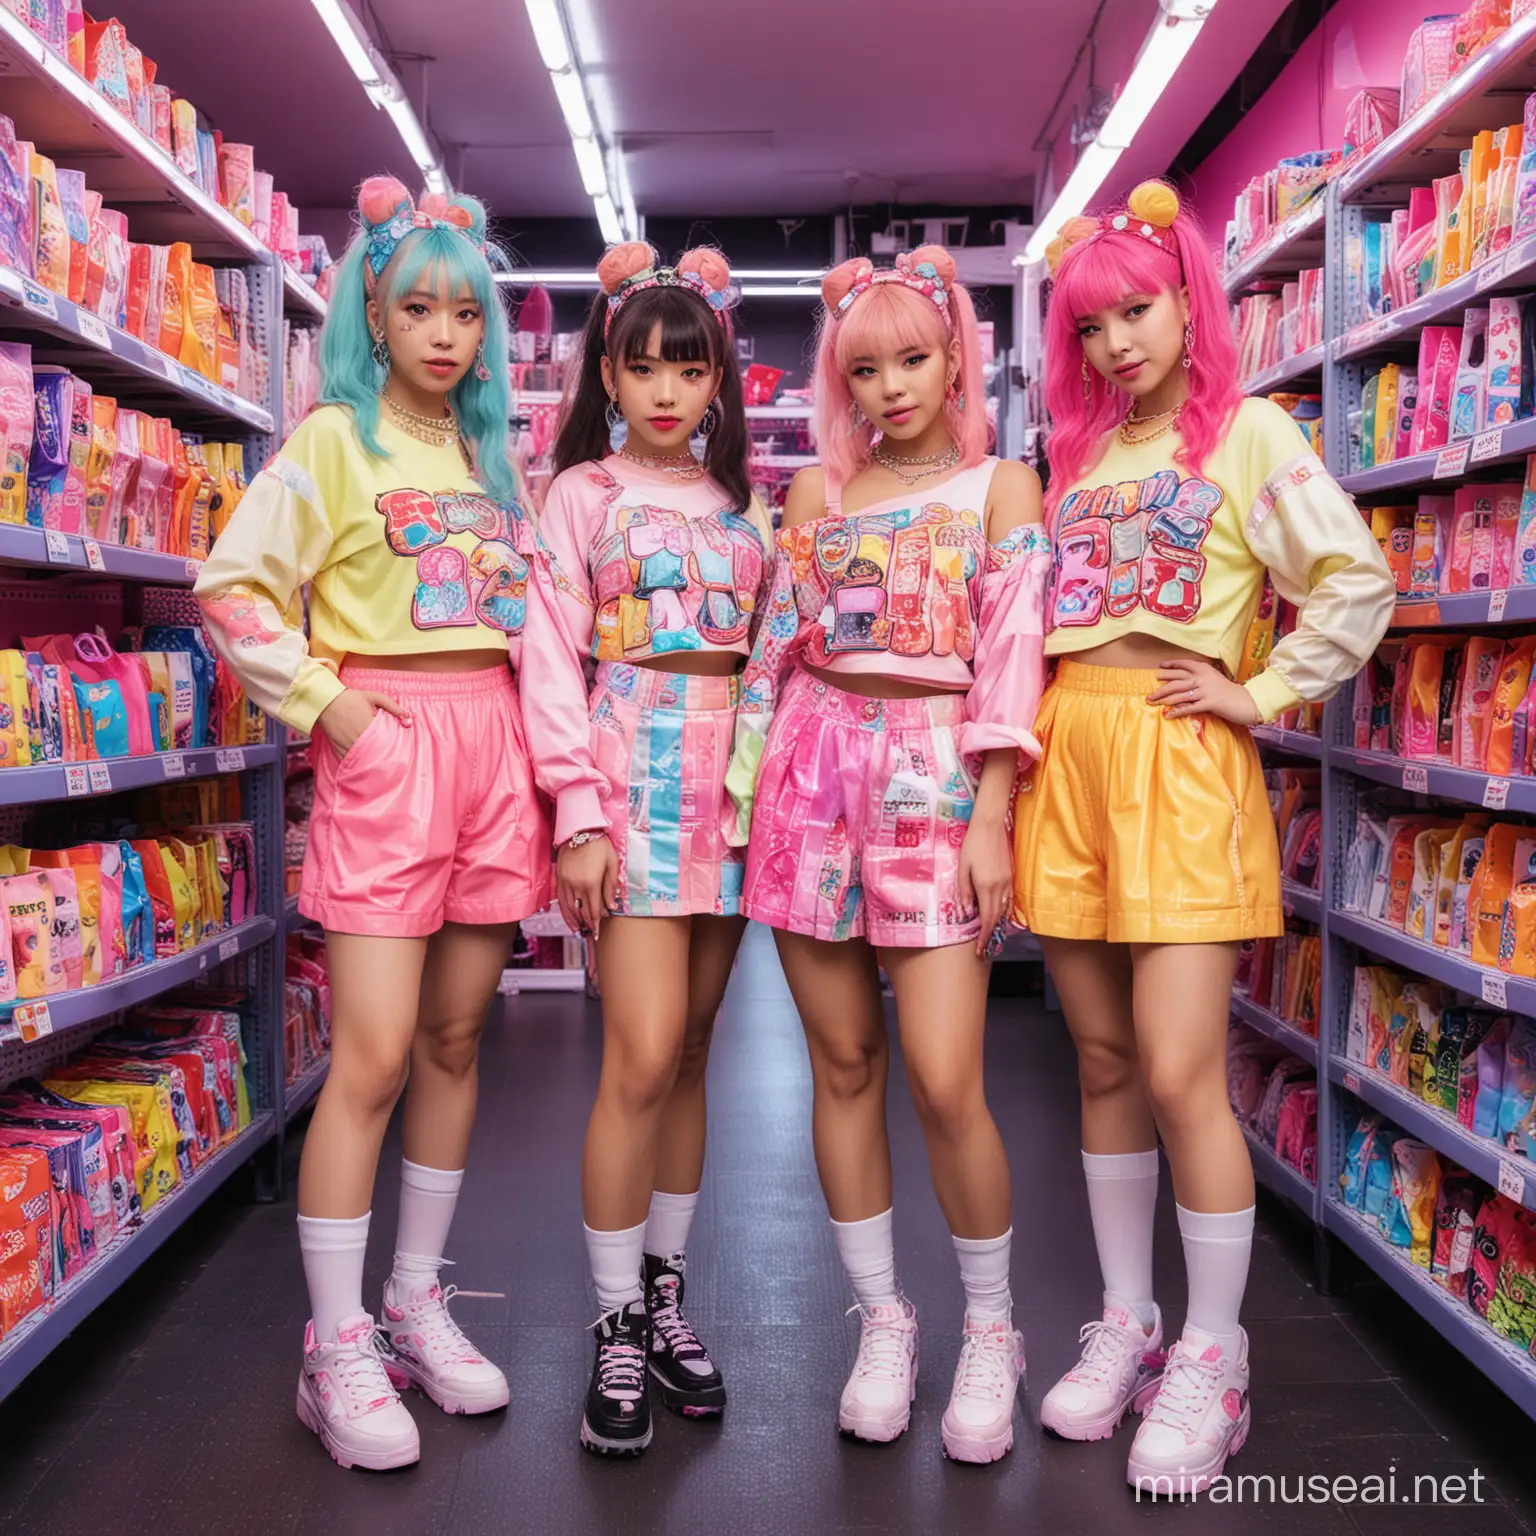 Harajuku Decora Fashion Girls Posing Amid Colorful Neon Racks